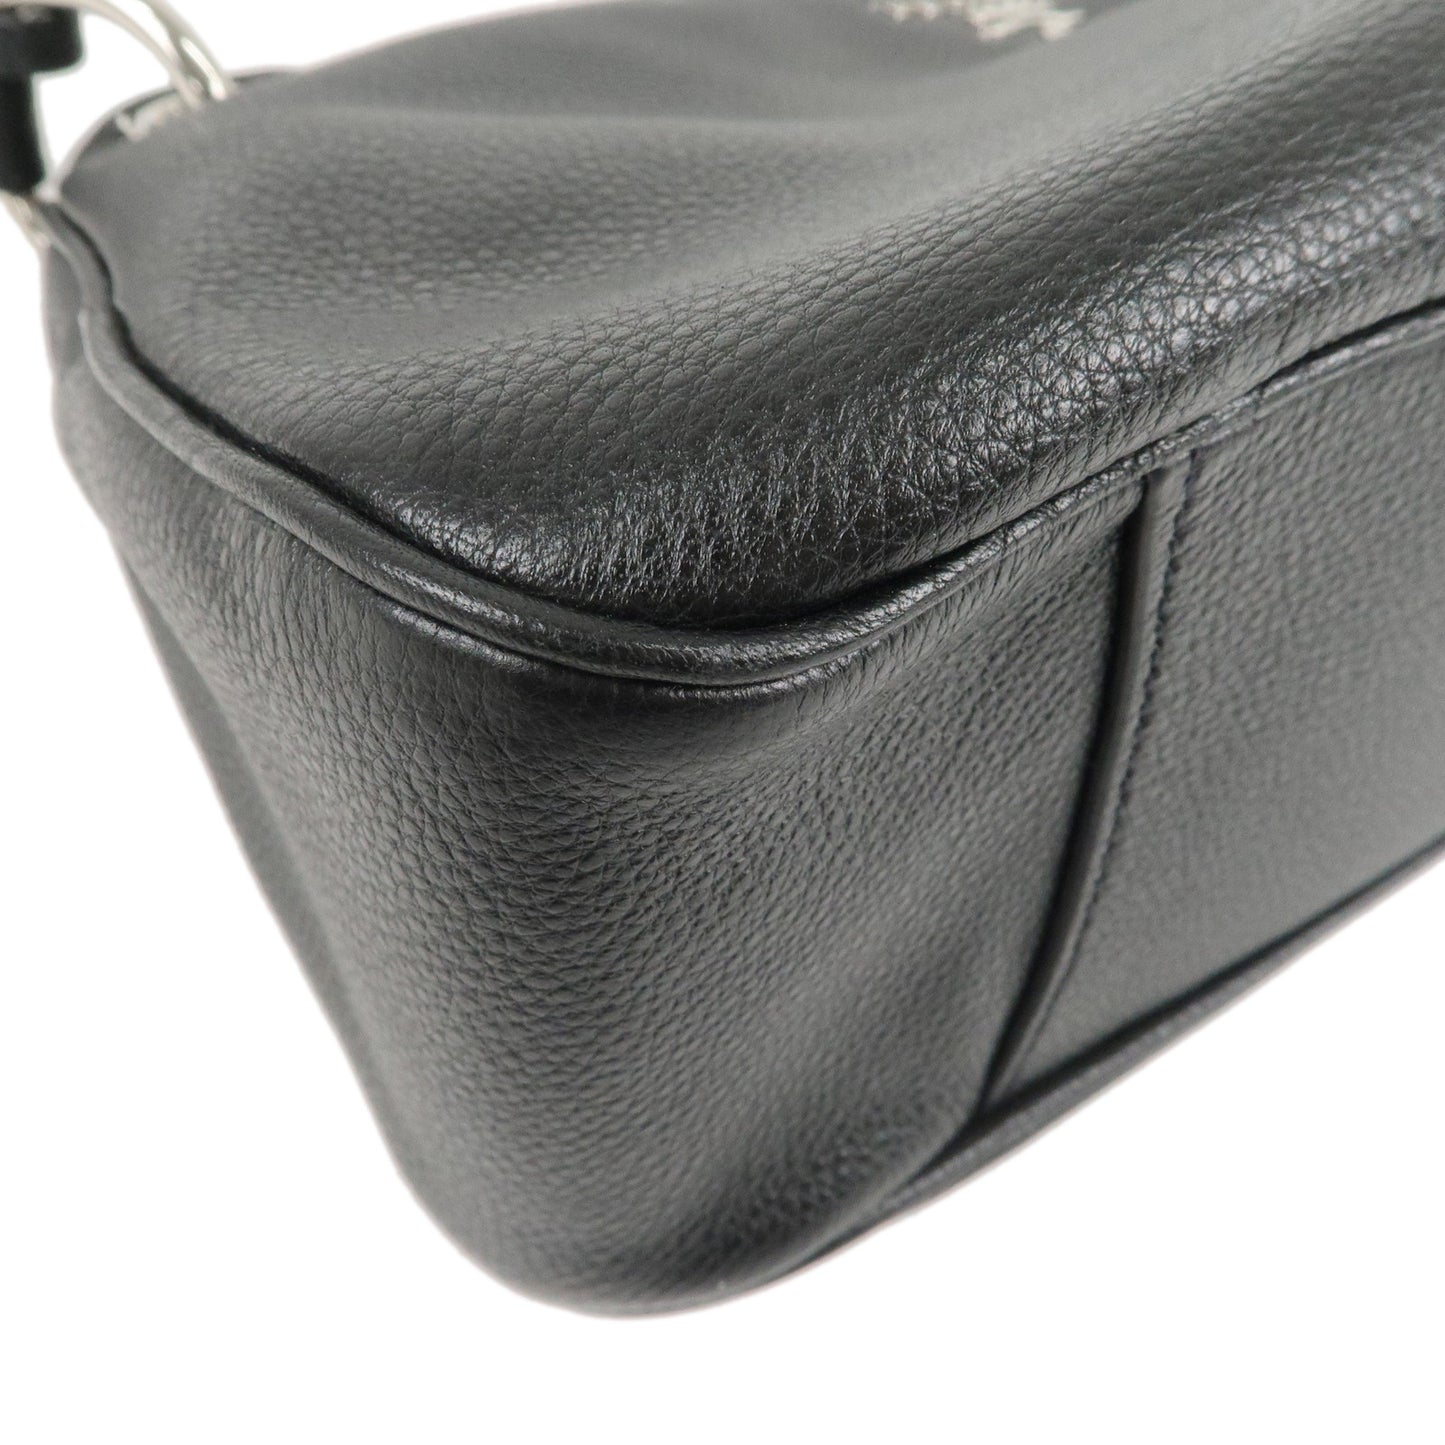 PRADA Leather Shoulder Bag NERO Black B4894M